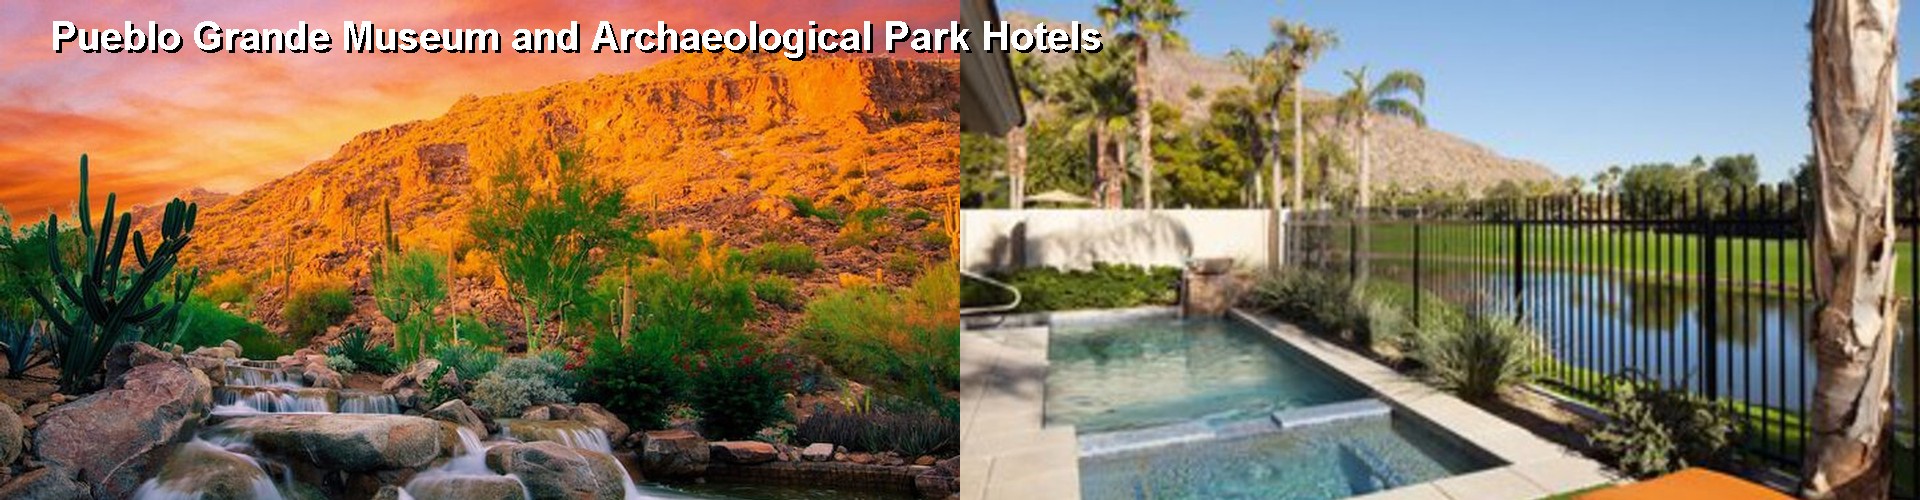 5 Best Hotels near Pueblo Grande Museum and Archaeological Park